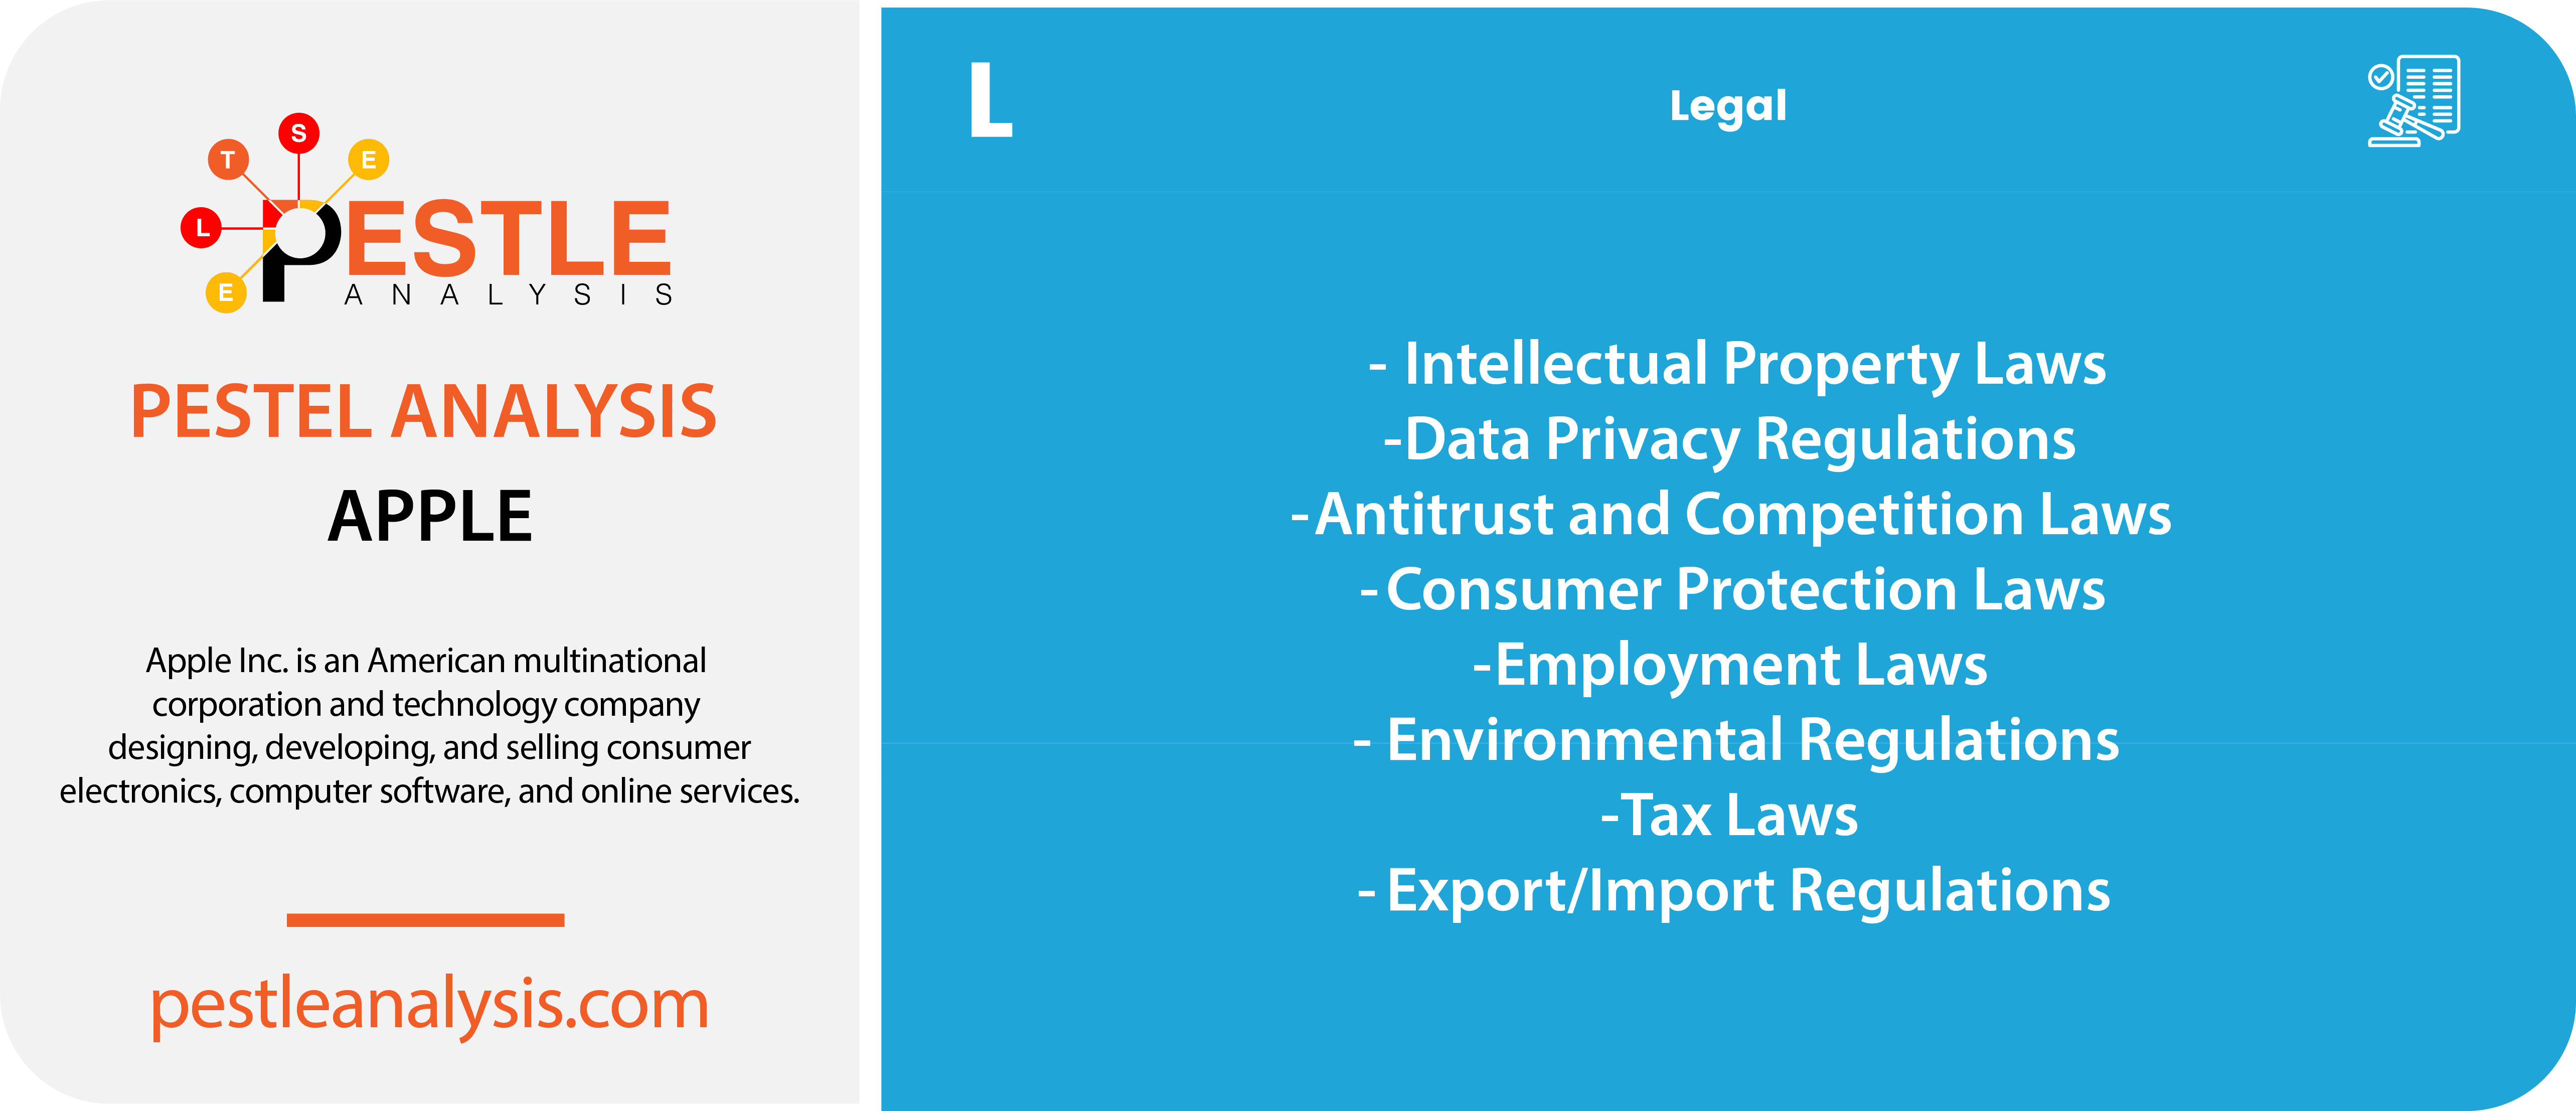 apple-pestle-analysis-legal-factors-template